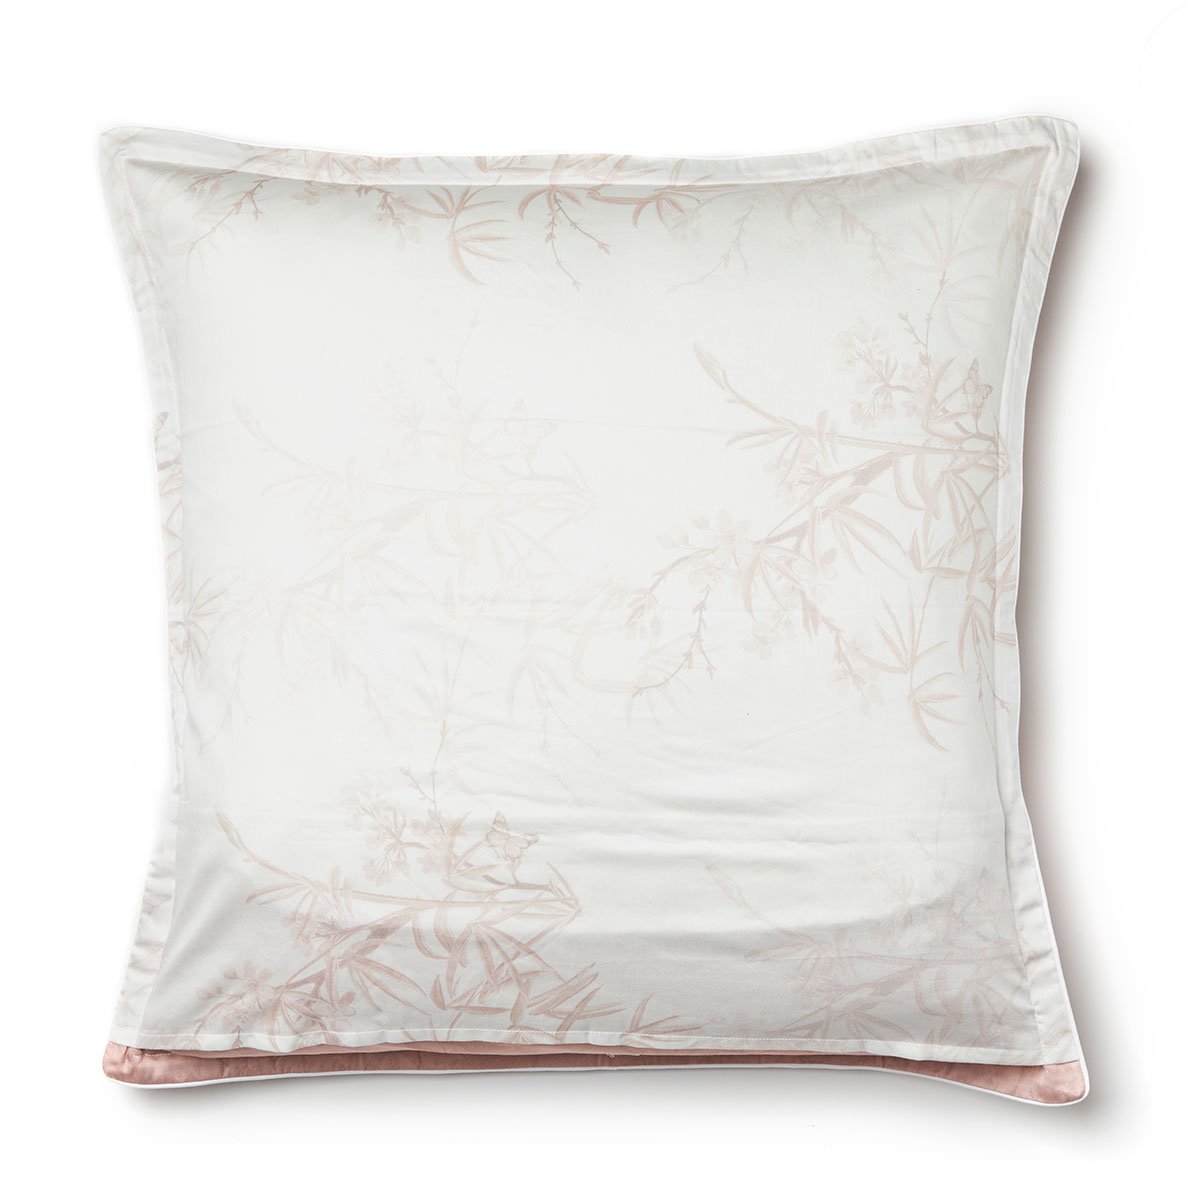 Mizumi Blush European Pillowcase by Private Collection